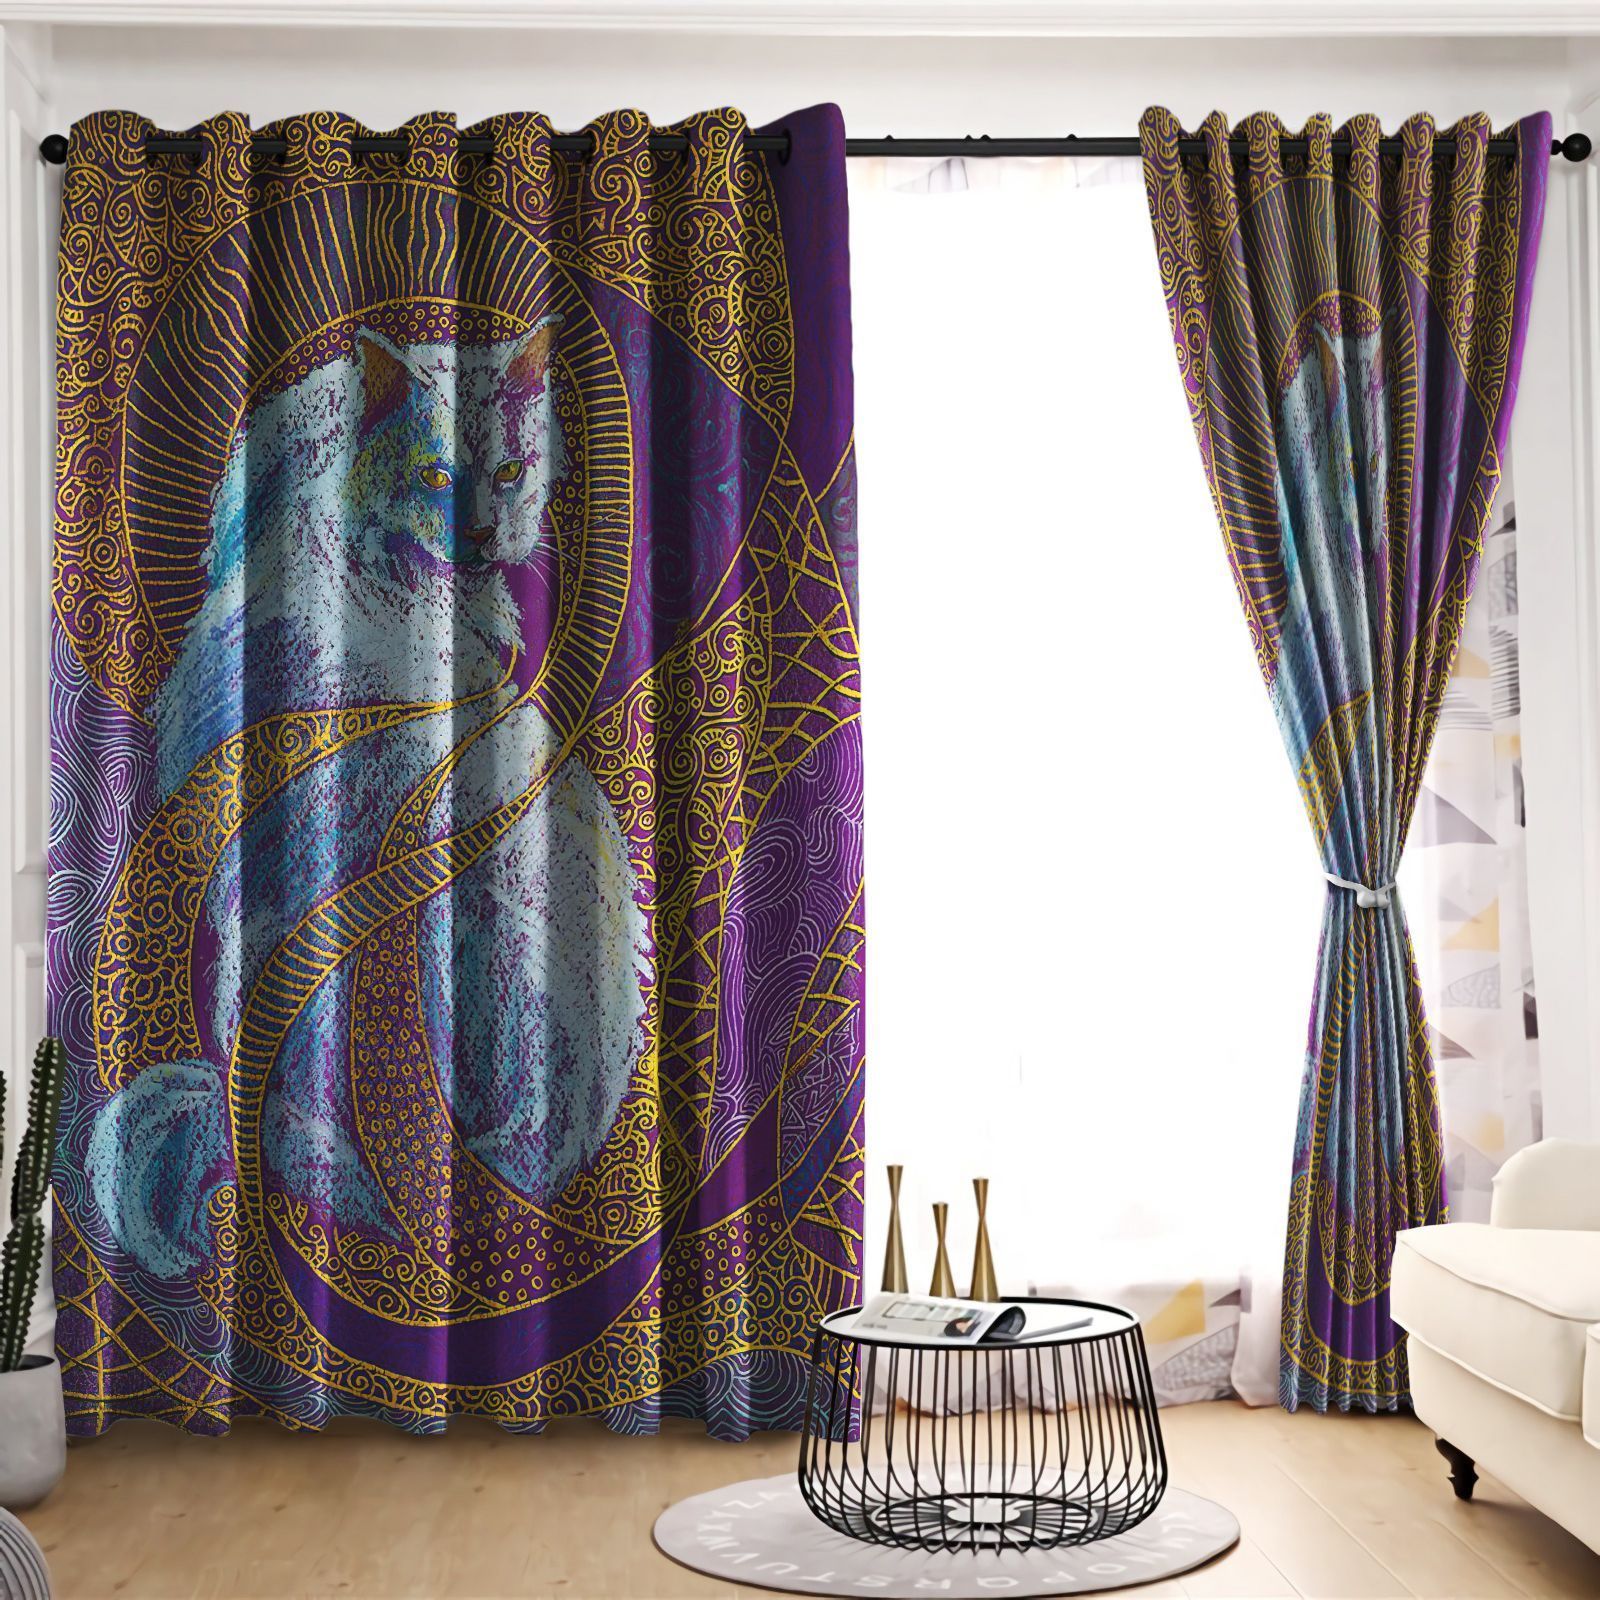 Grumpy Cat Golden Galaxy Printed Window Curtain Home Decor